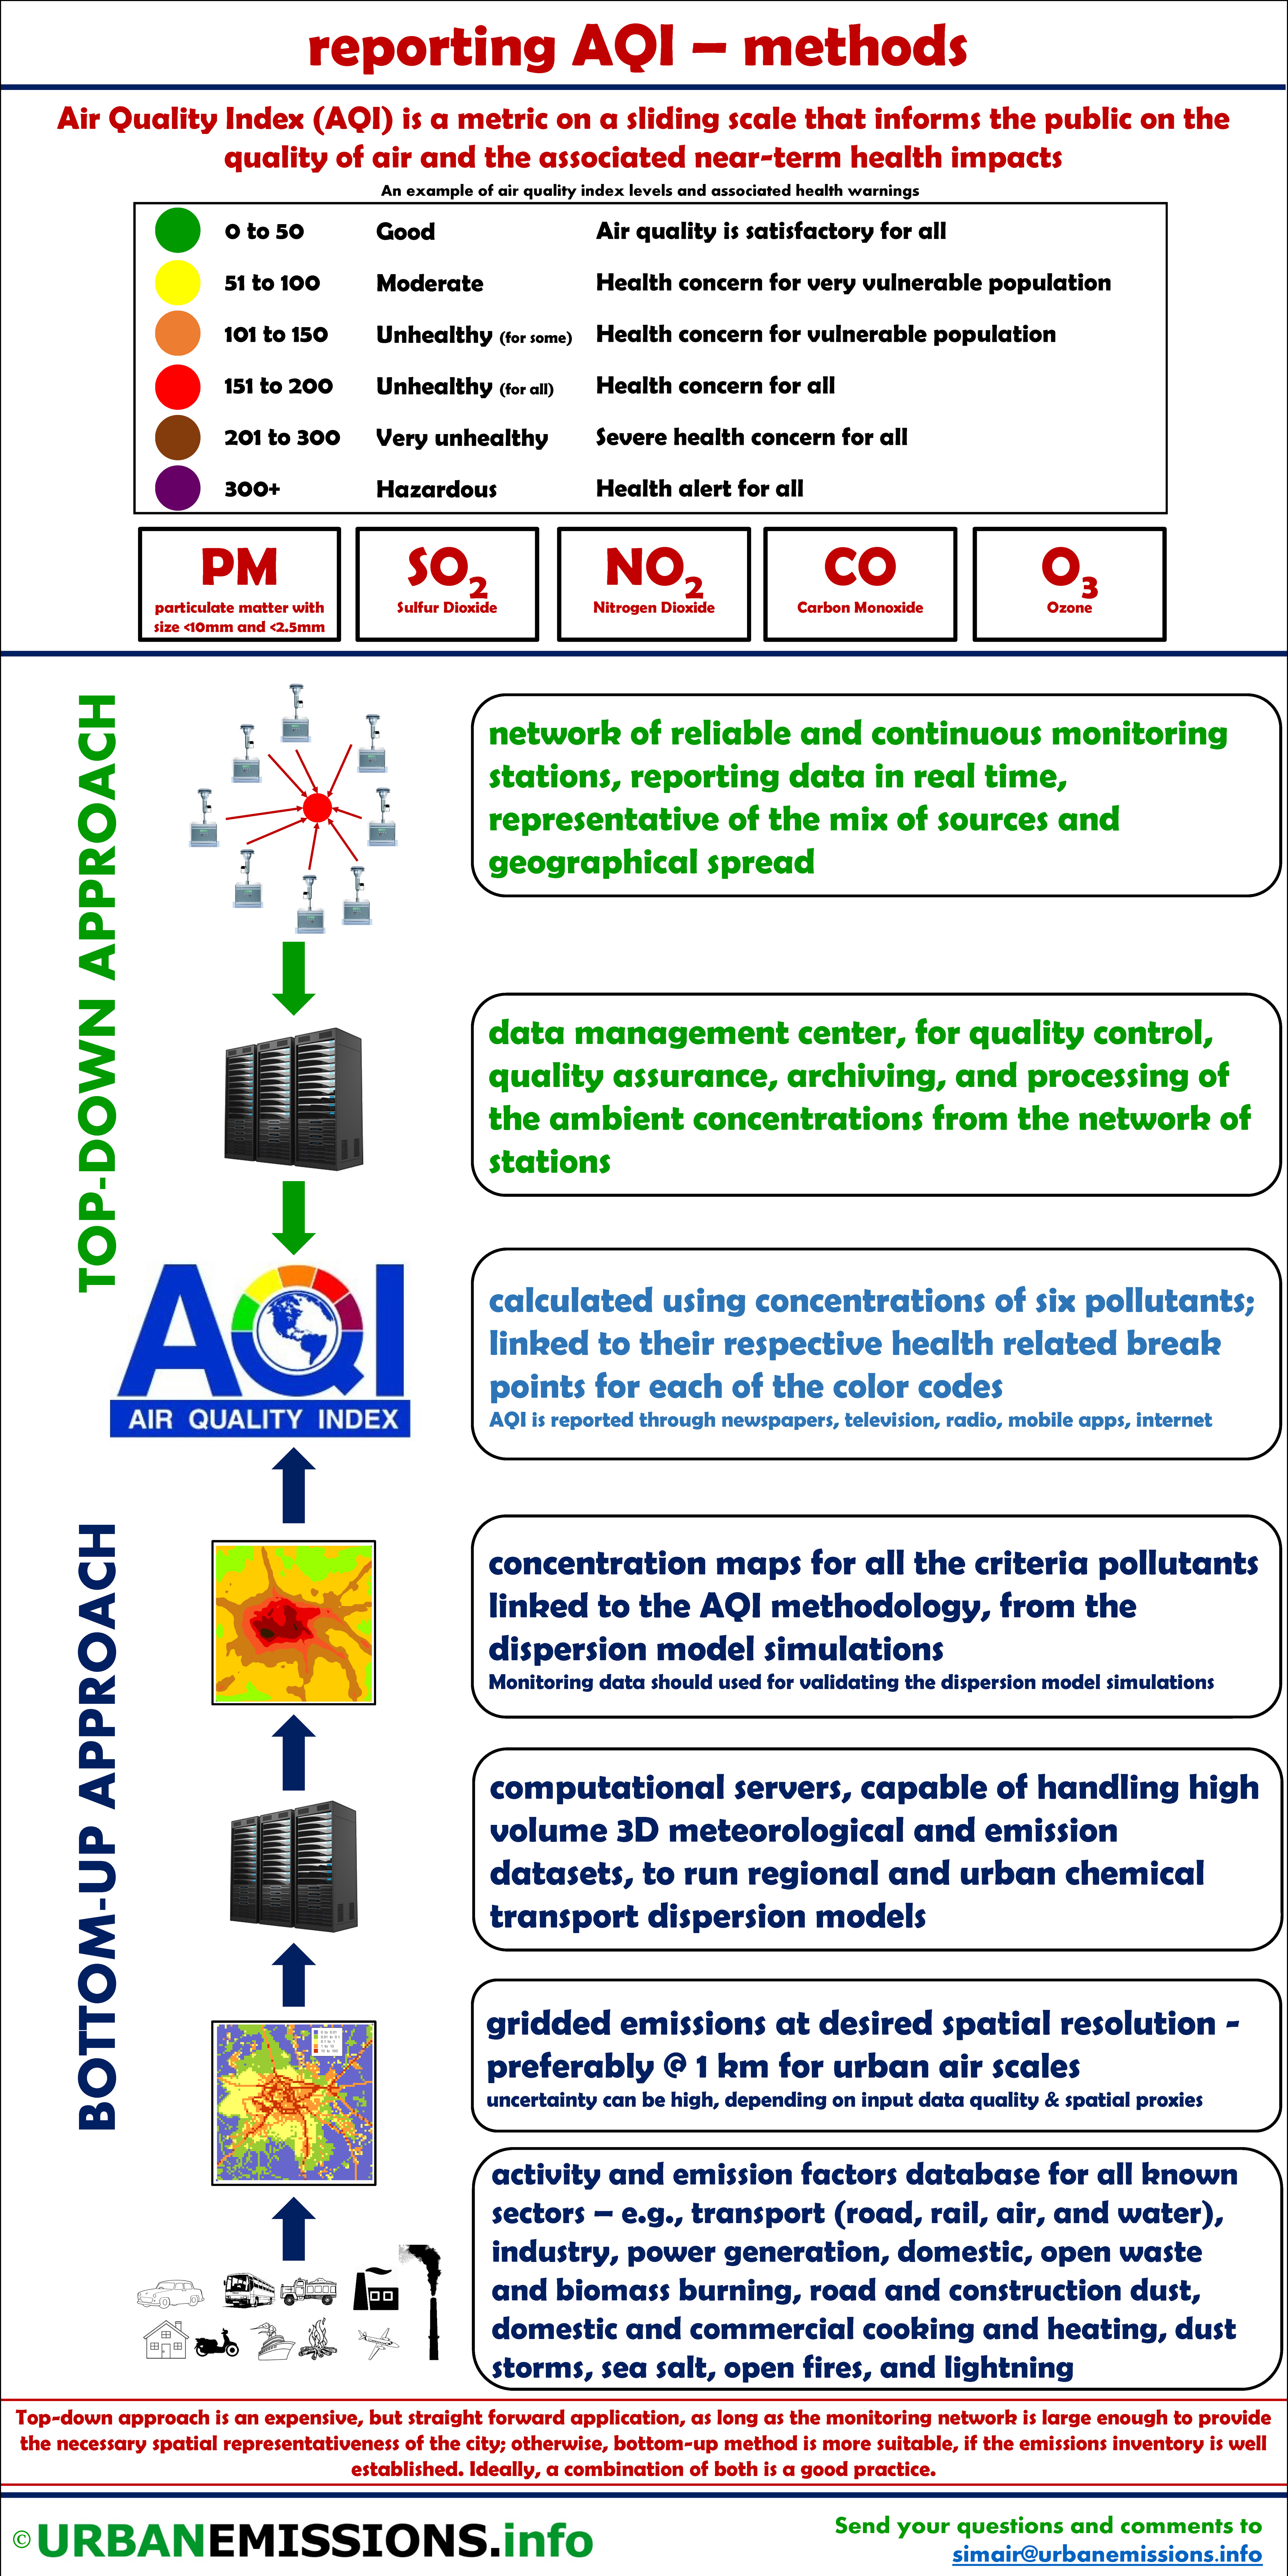 Methods for Reporting AQI